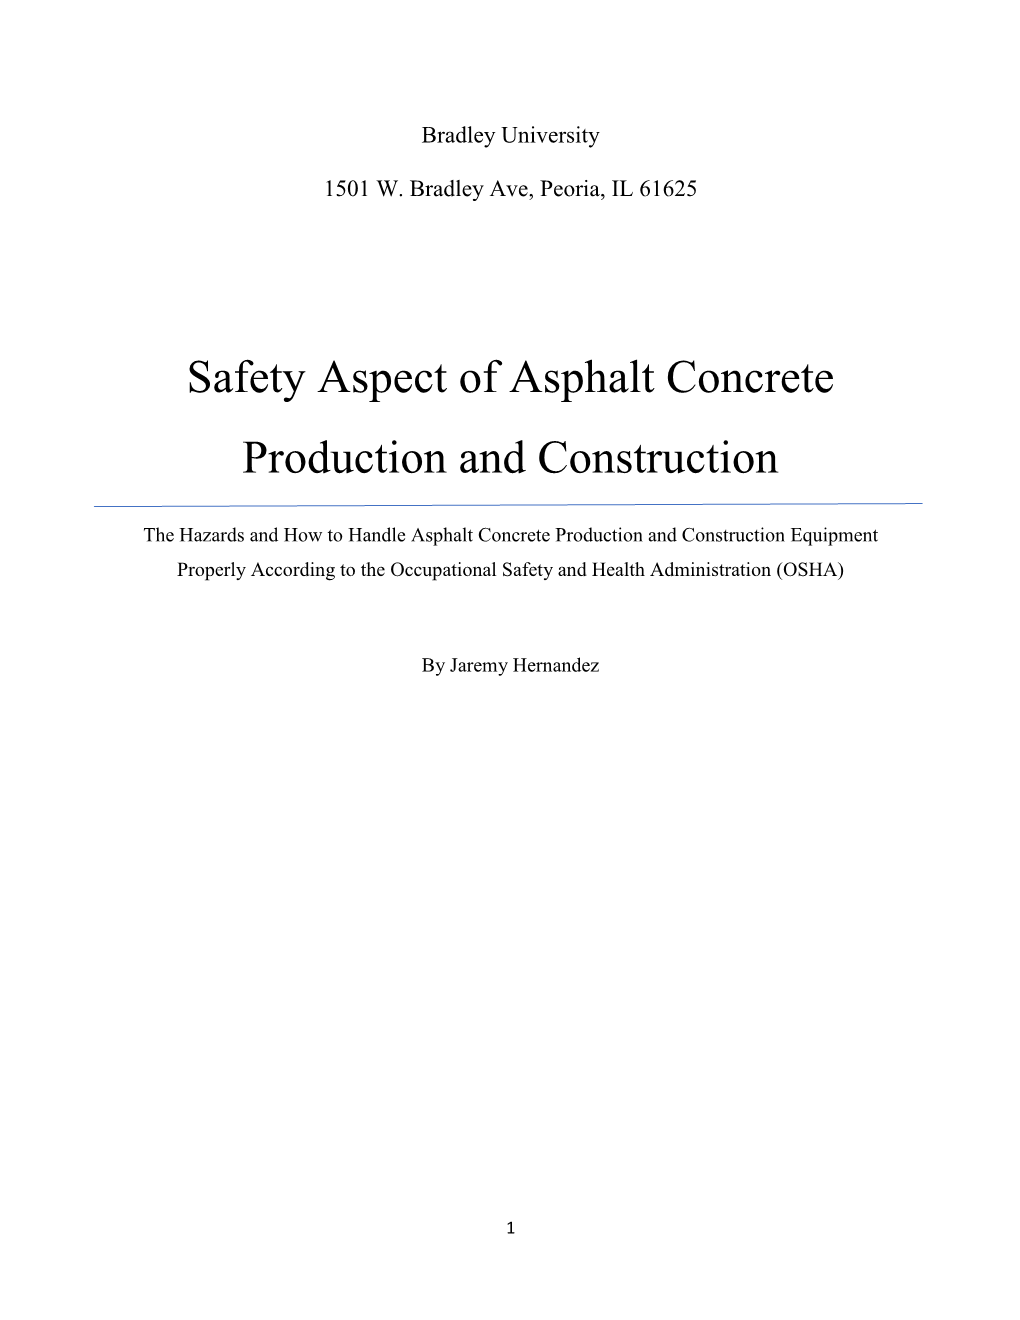 Safety Aspect of Asphalt Concrete Production and Construction